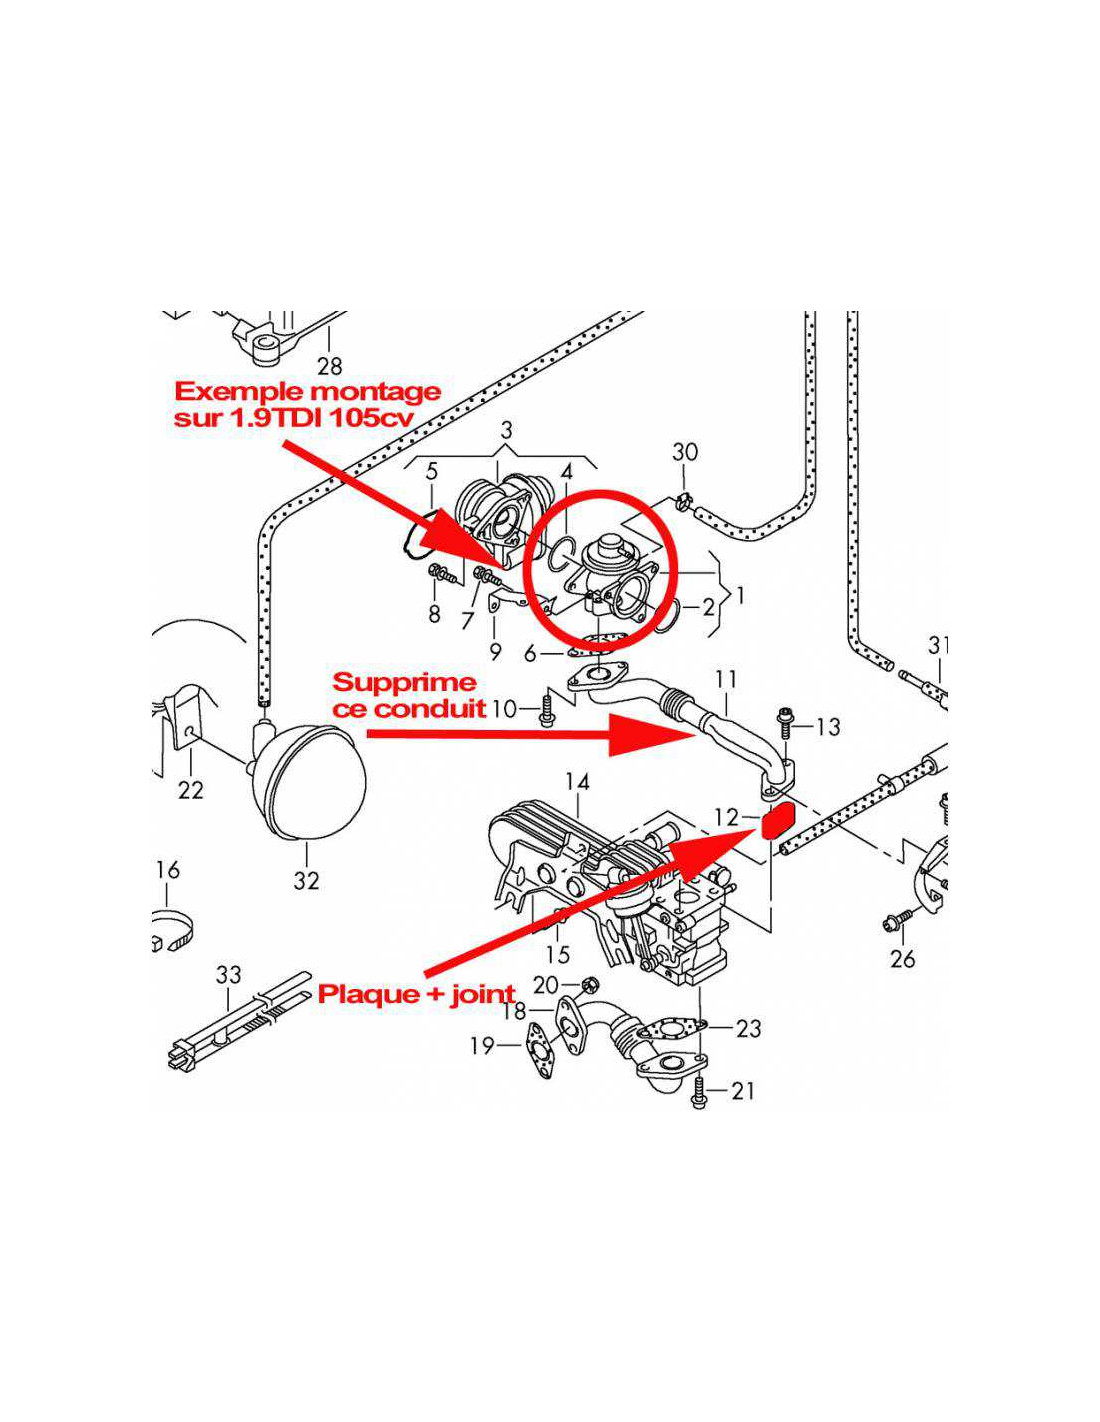 Kit de suppression EGR, Audi / Seat / Skoda / VW - Plaques suppress